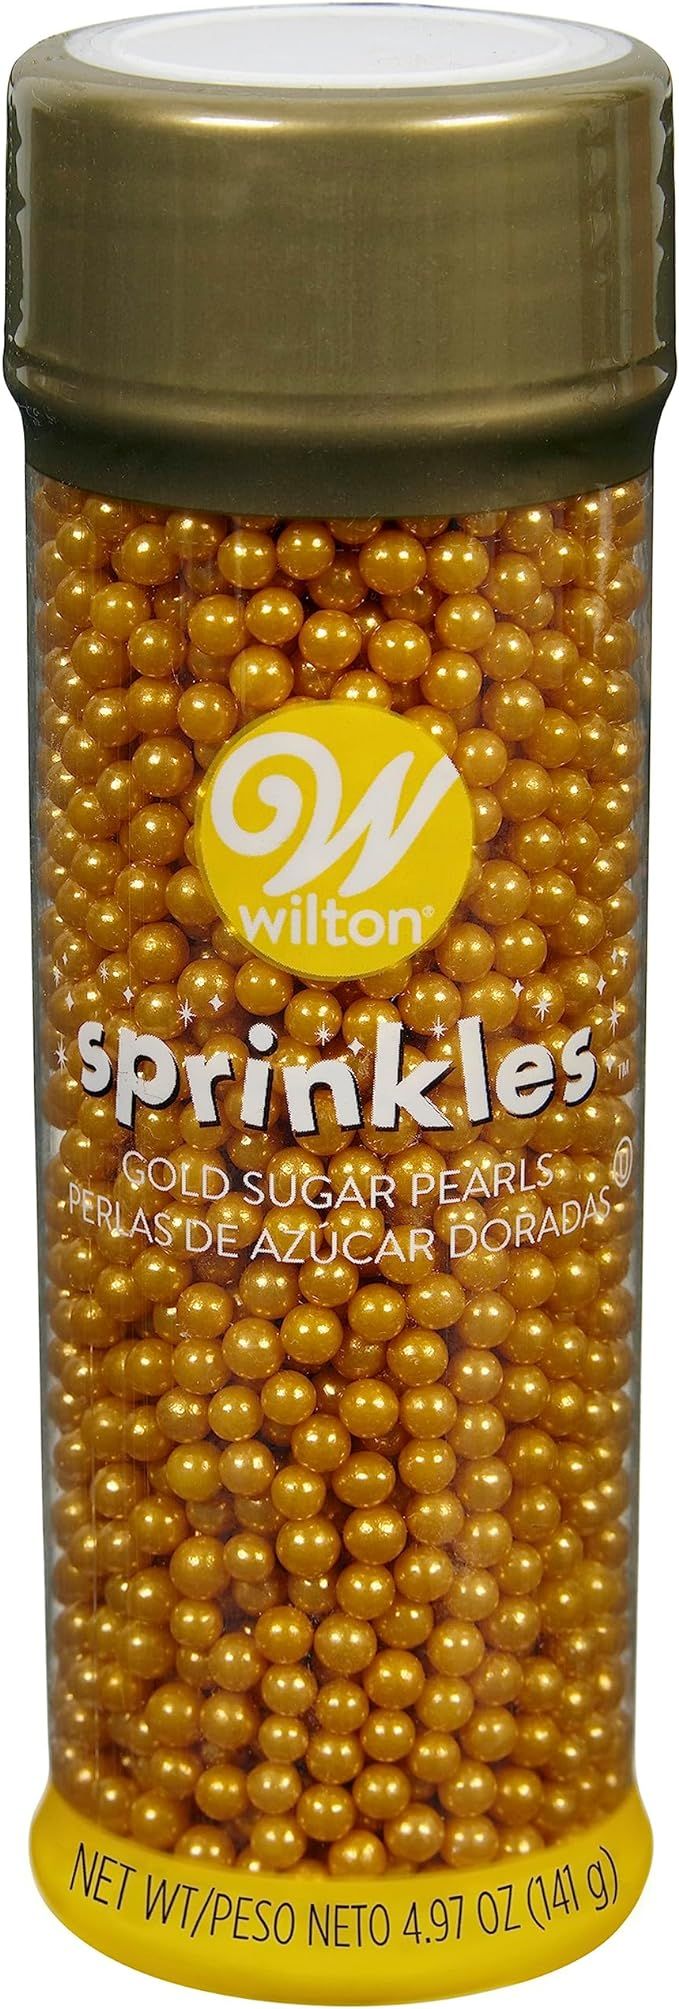 Wilton Sugar Pearls, 141 gram, Gold, Non Toxic | Amazon (US)